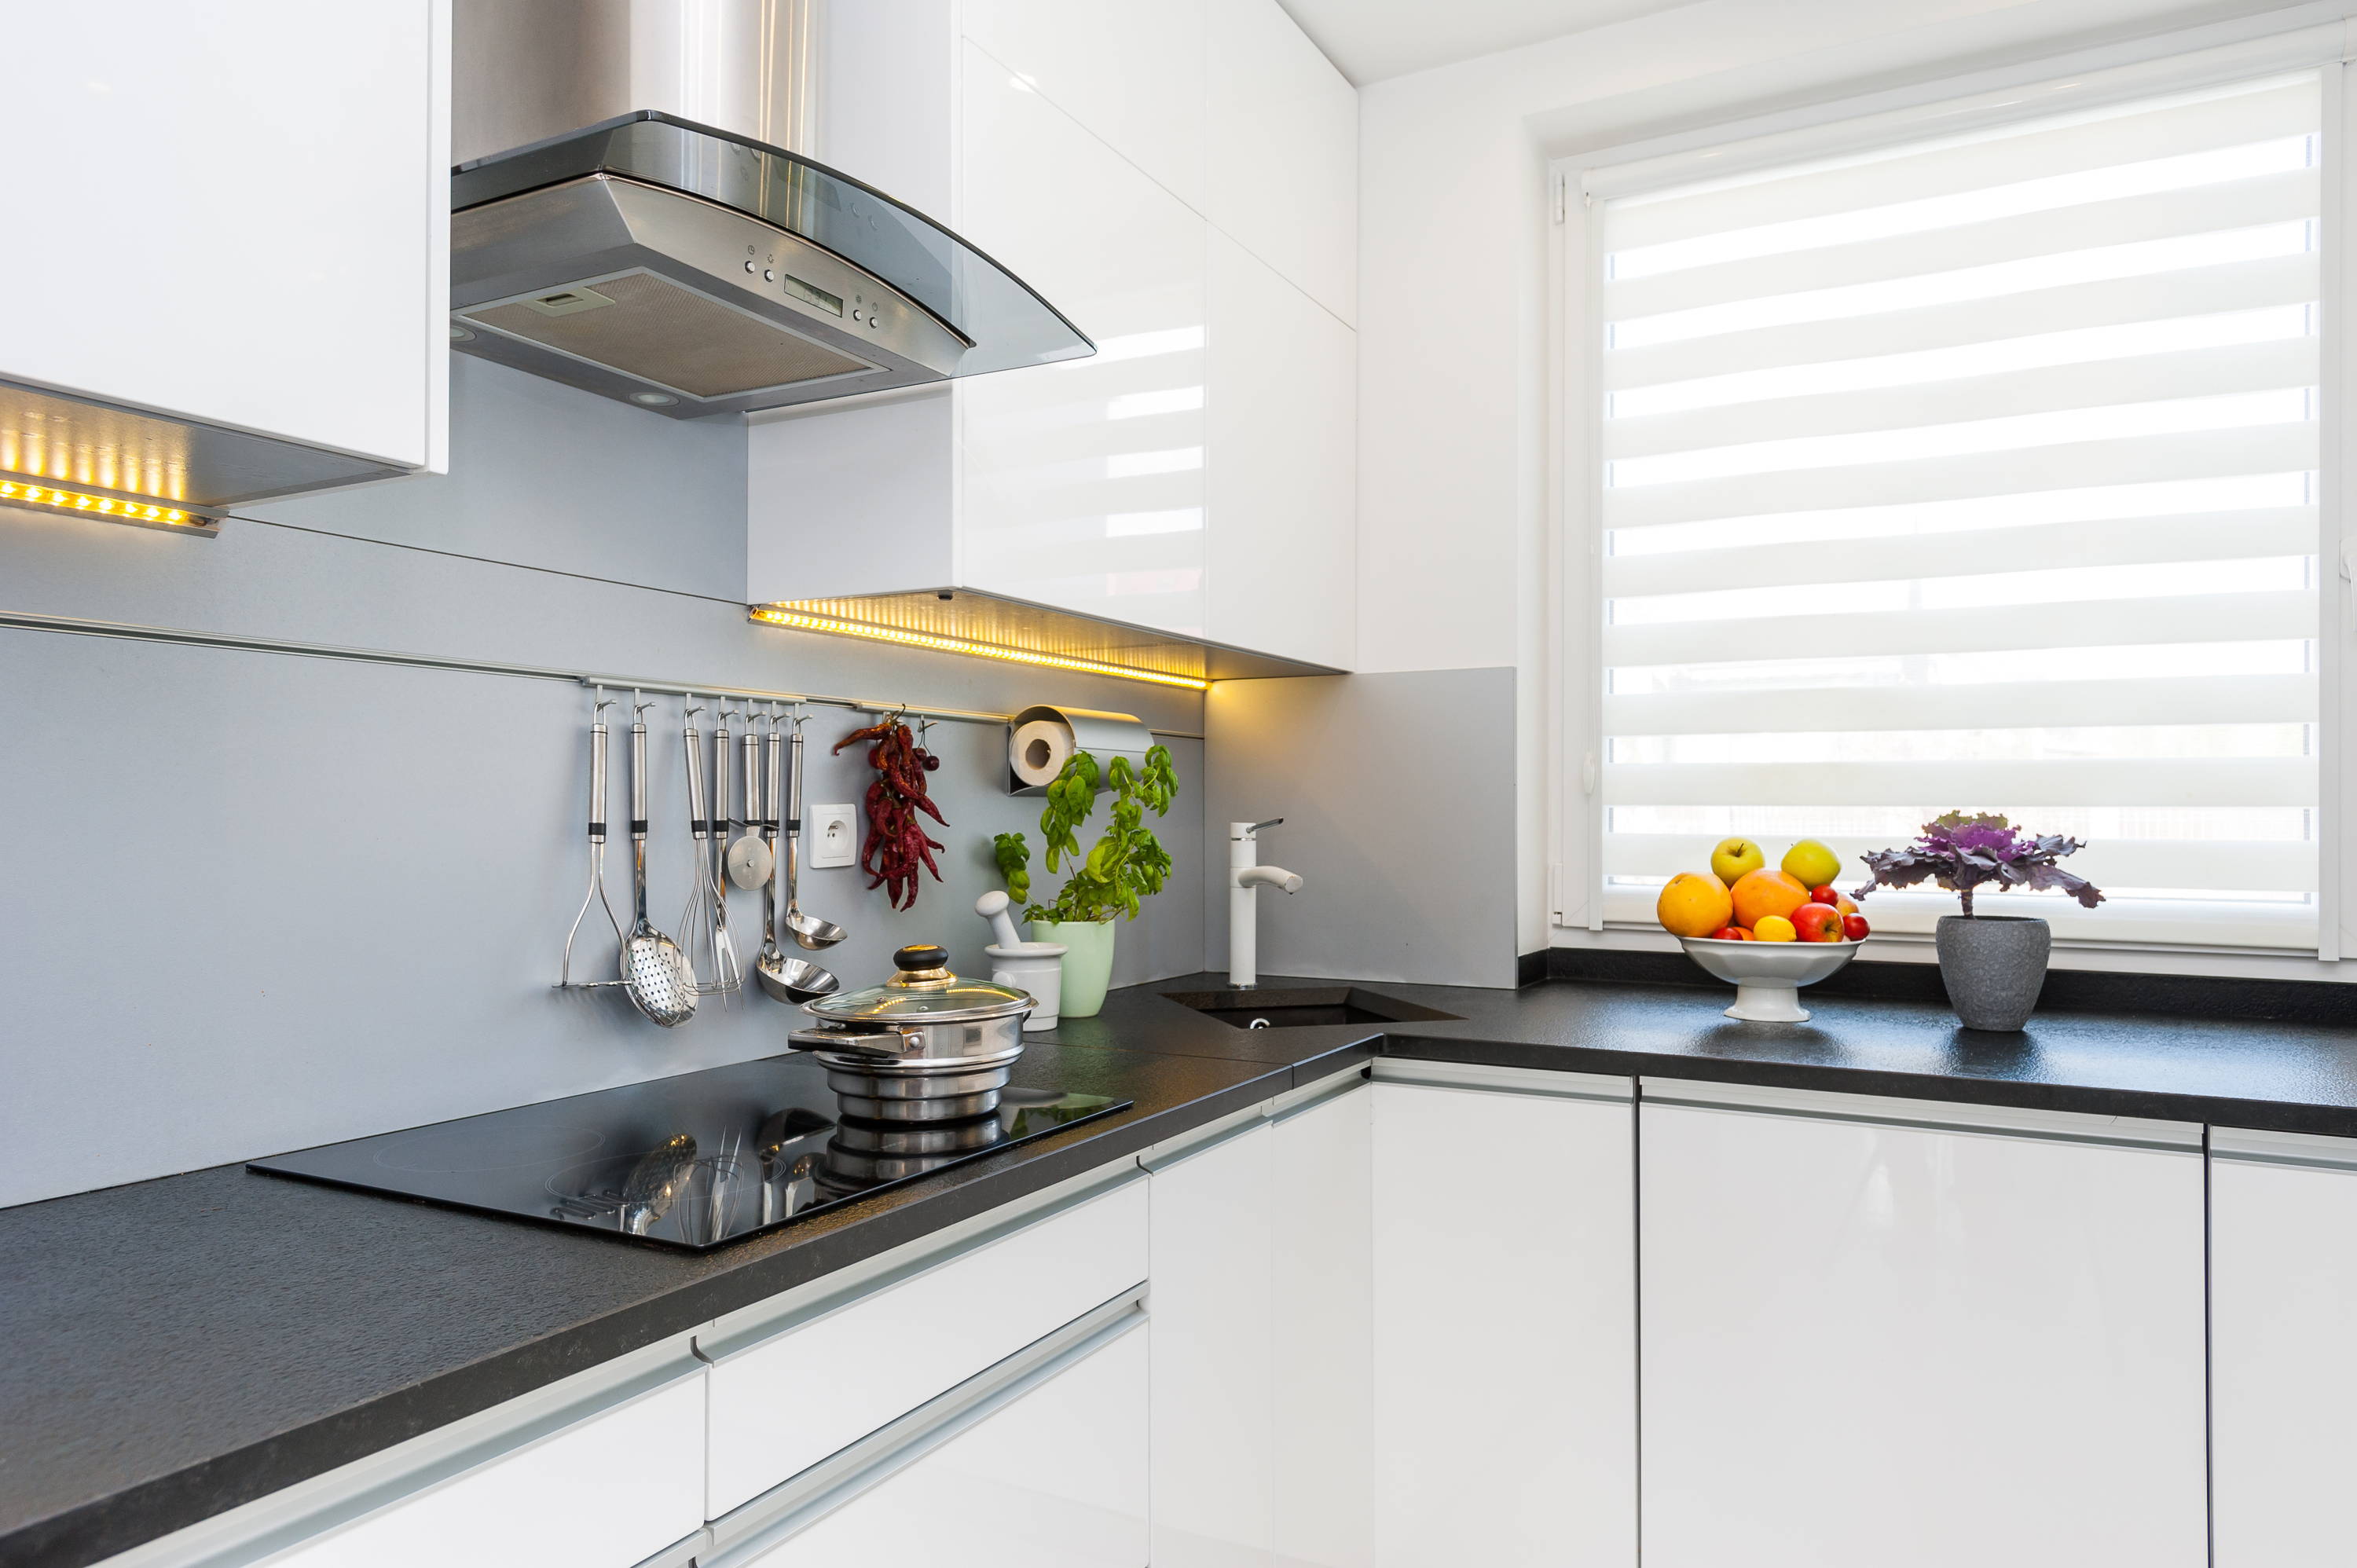 Kitchen Blinds - Best window blinds for kitchen